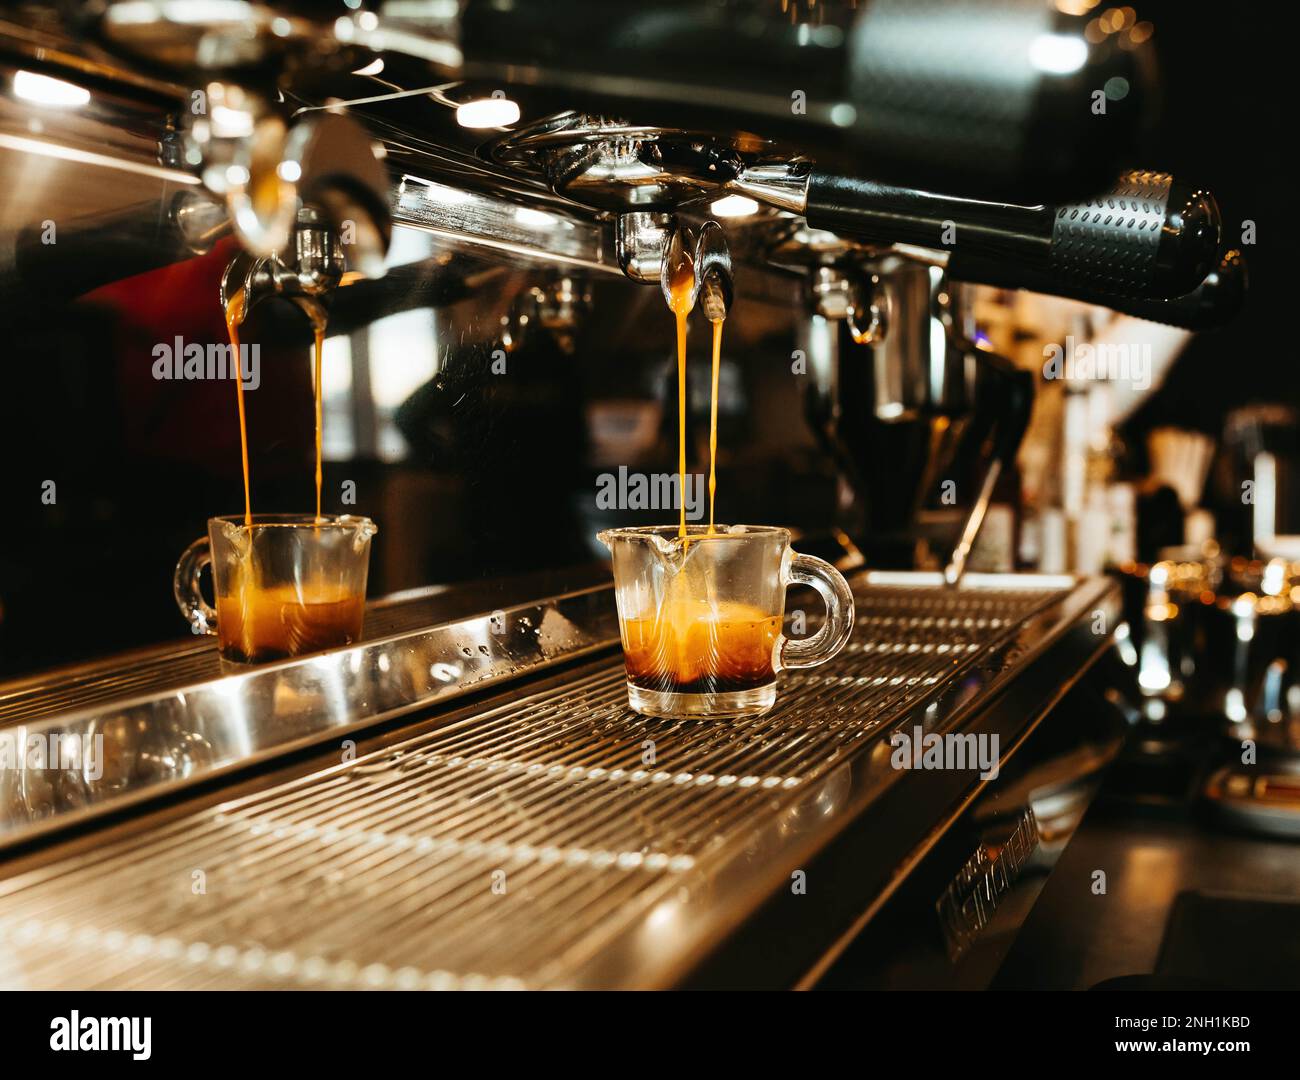 Coffee shop espresso machine close up Stock Photo